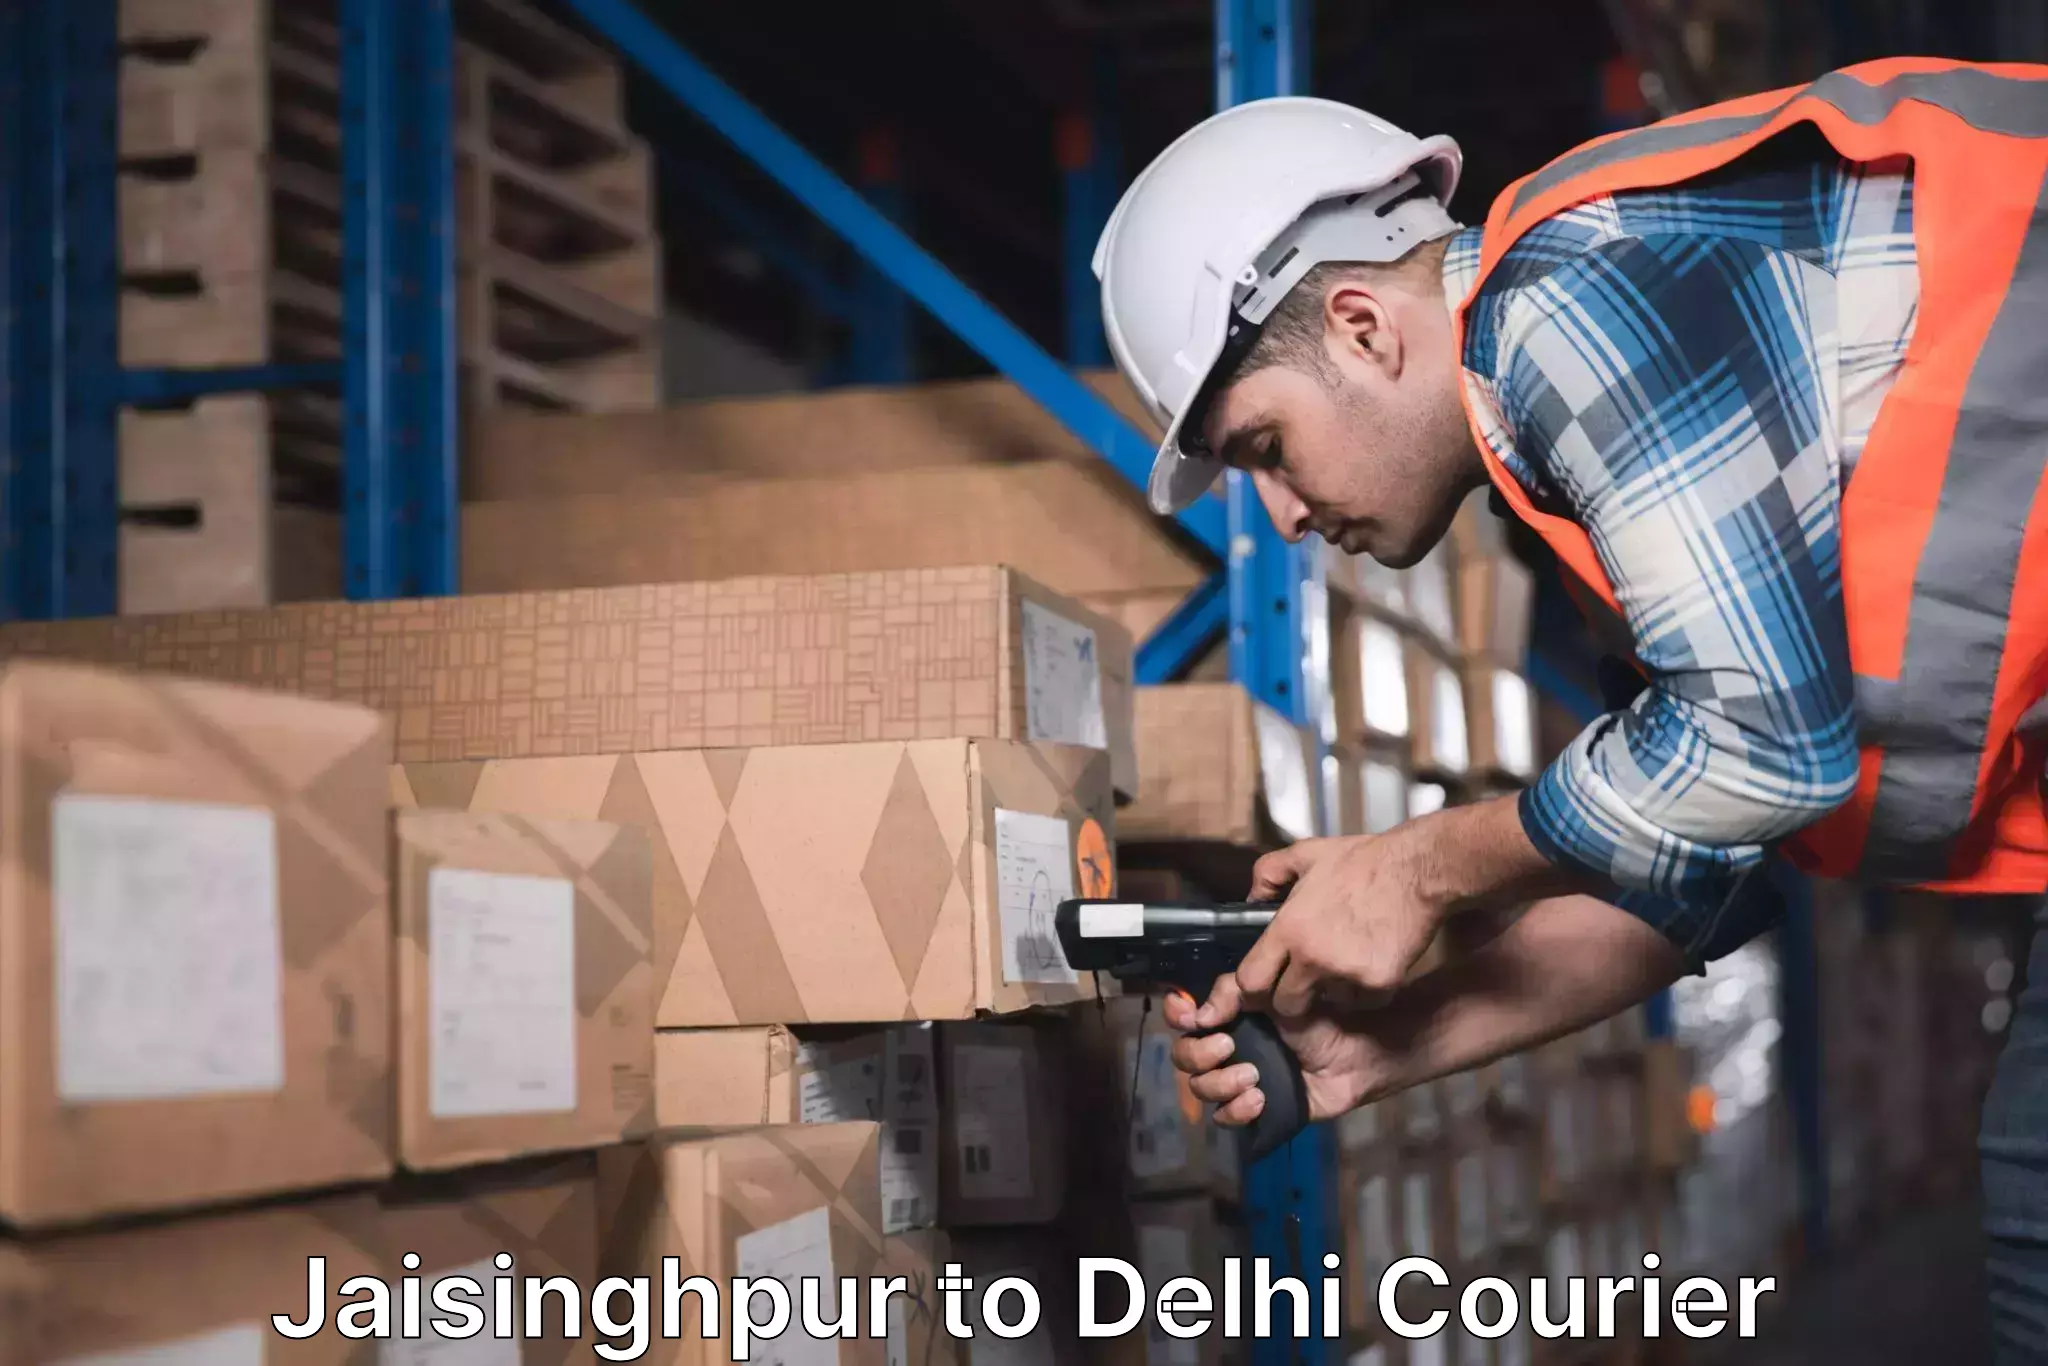 Reliable delivery network Jaisinghpur to Delhi